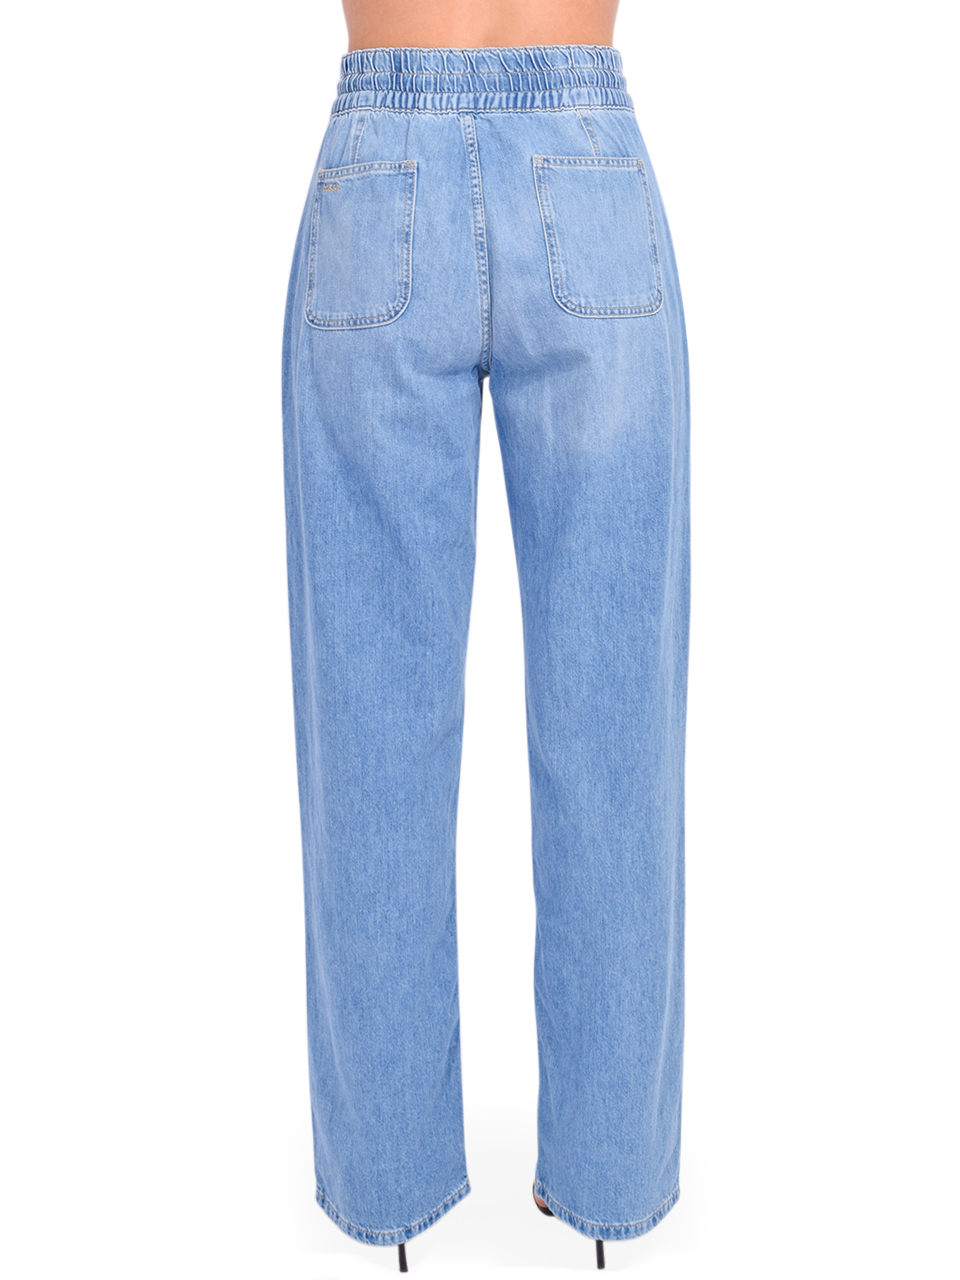 BA&SH Mima Elastic Waist Jeans in Blue Back View
